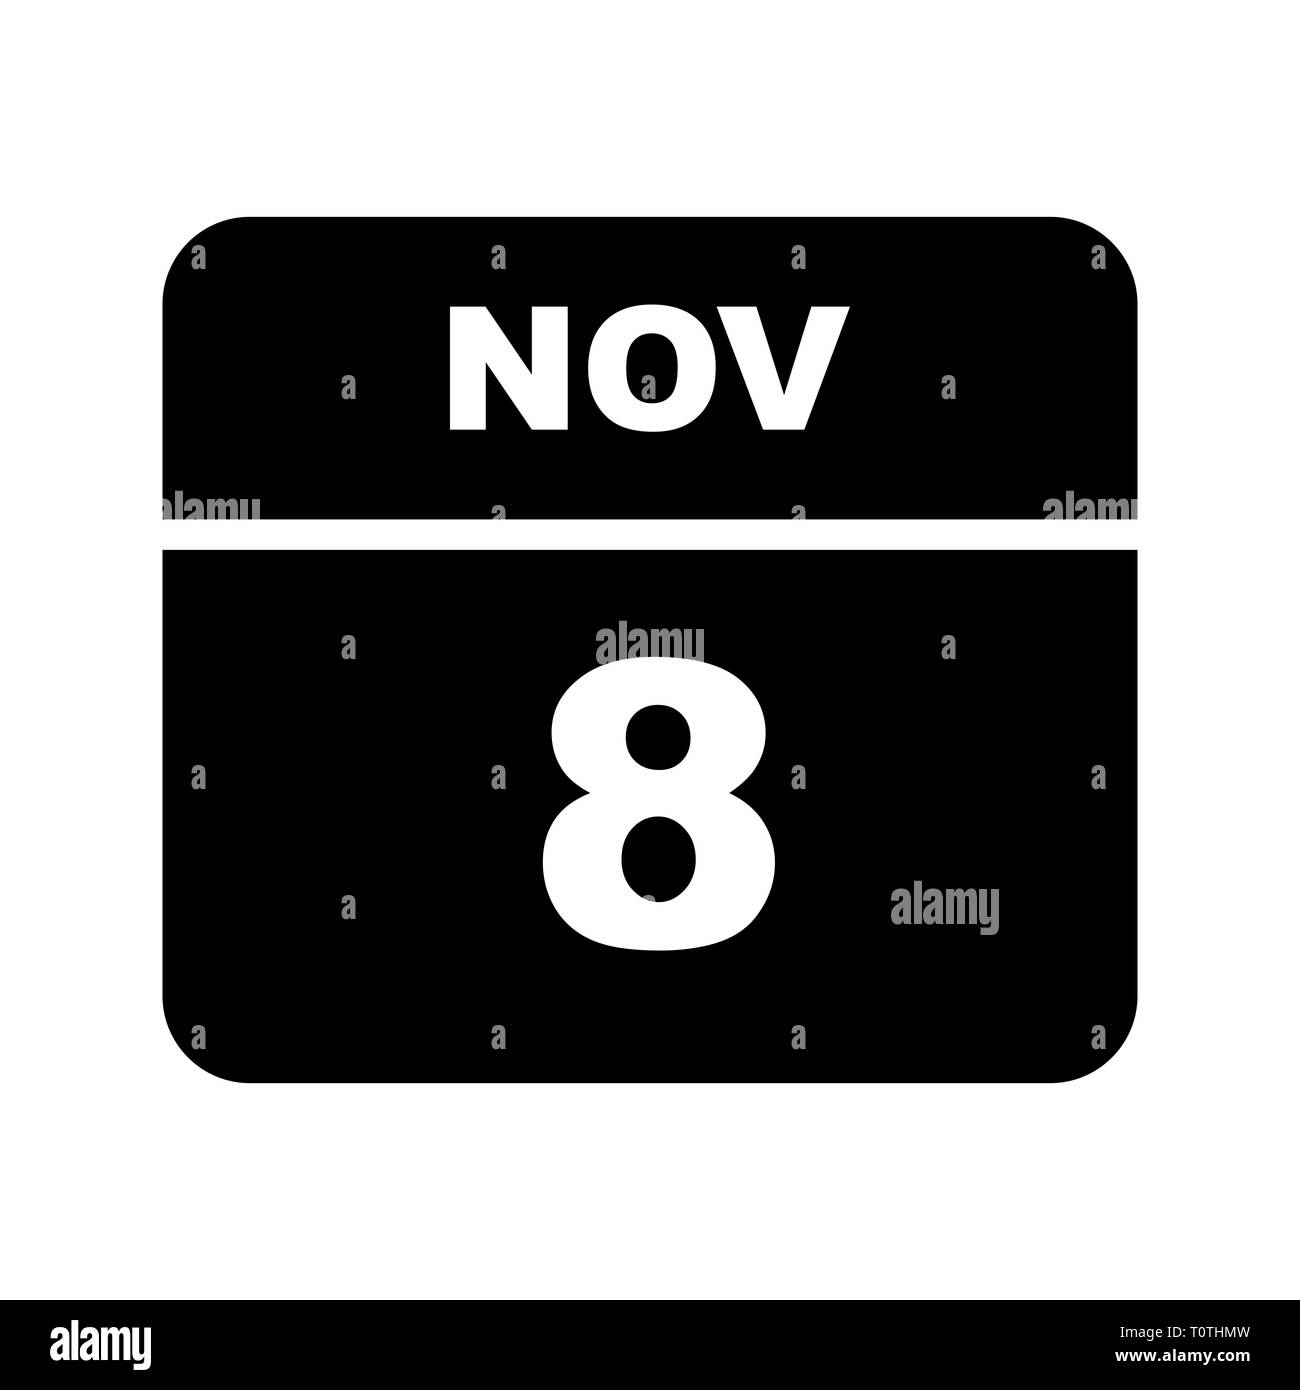 November 8th Date on a Single Day Calendar Stock Photo Alamy